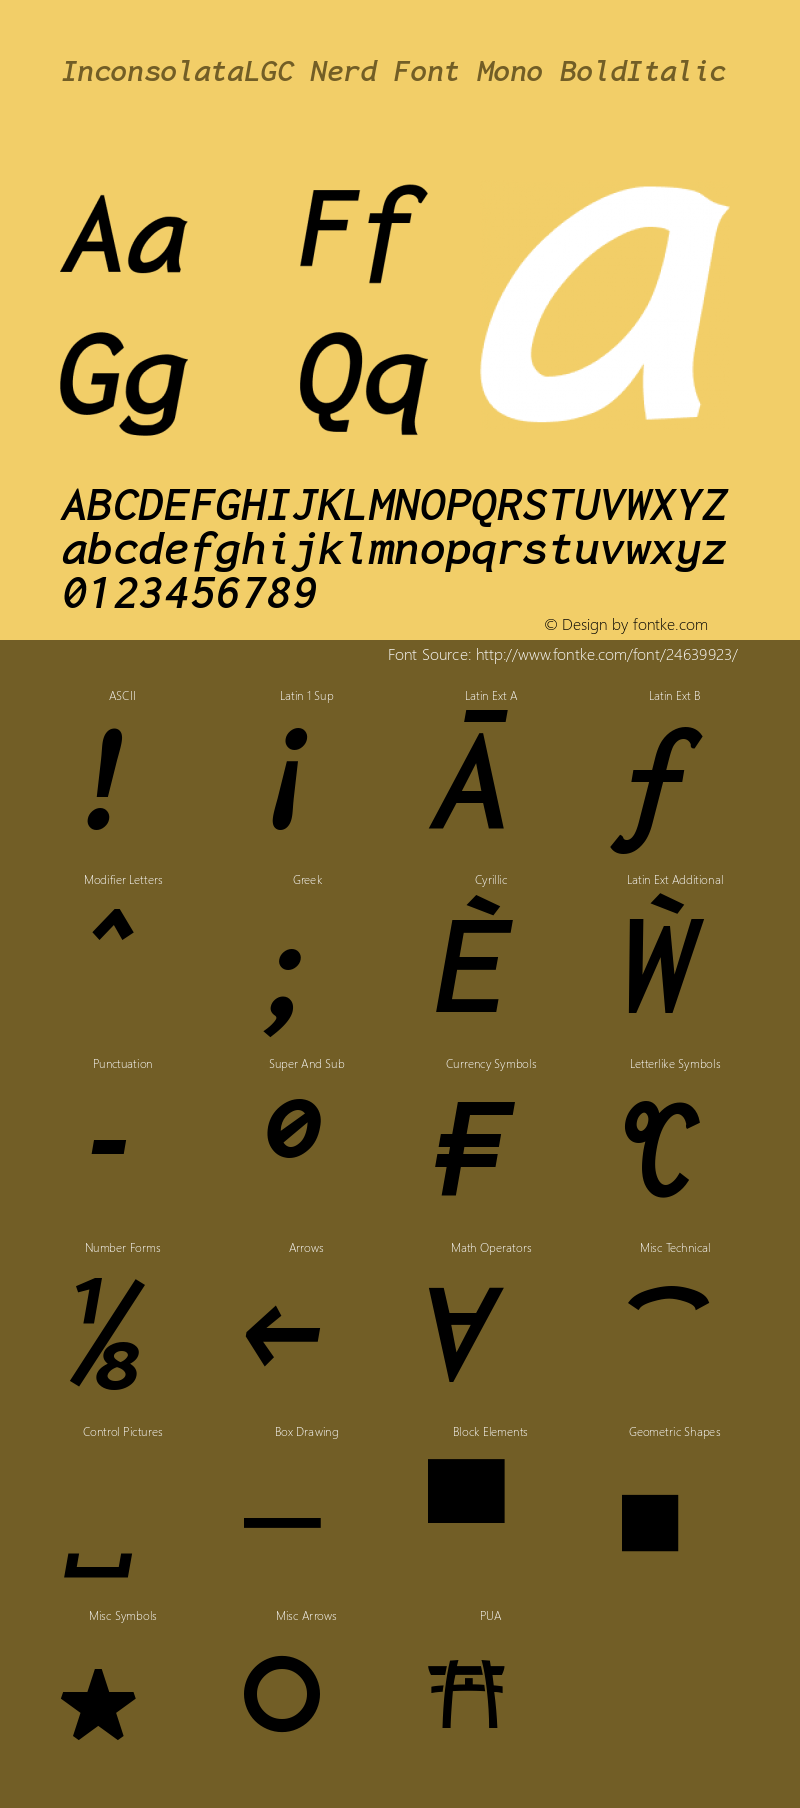 Inconsolata LGC Bold Italic Nerd Font Complete Mono Version 1.3;Nerd Fonts 1.2.0 Font Sample